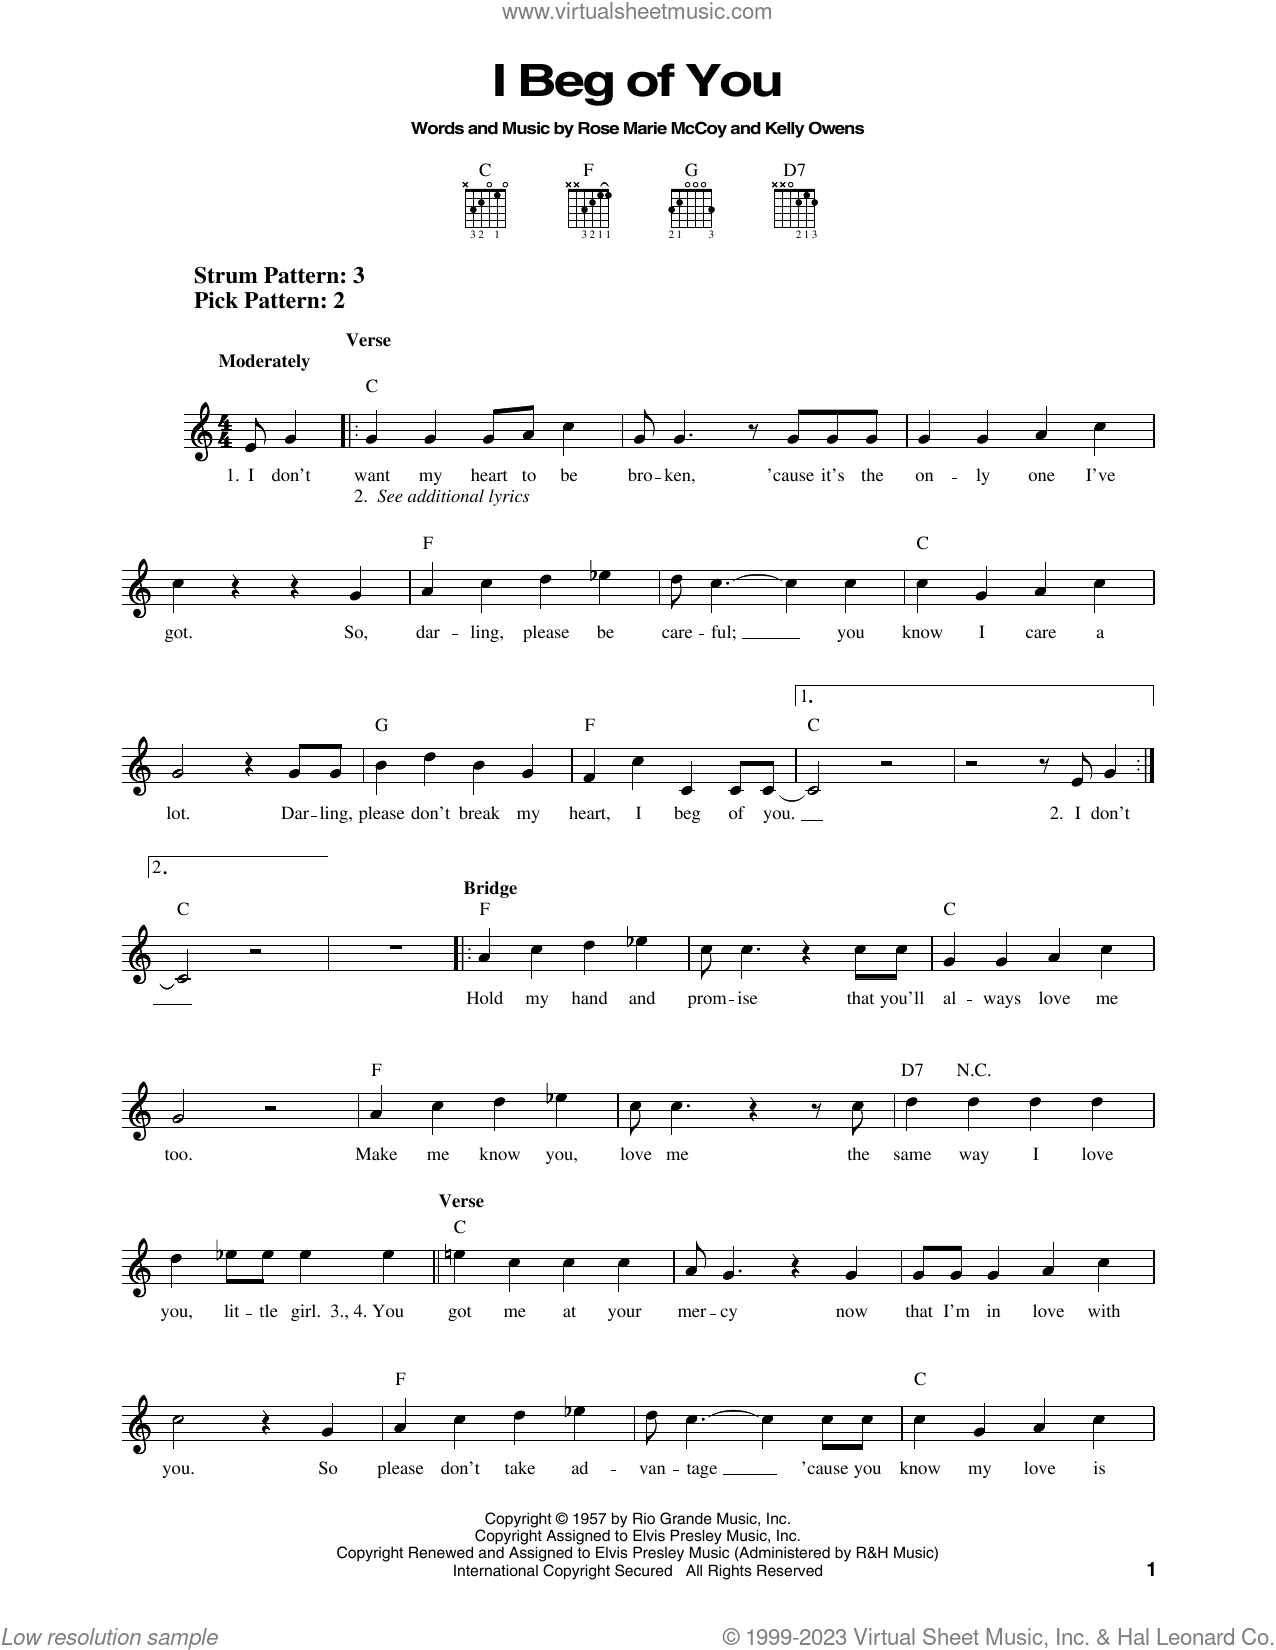 Stuck On You sheet music for guitar (chords) (PDF) v2